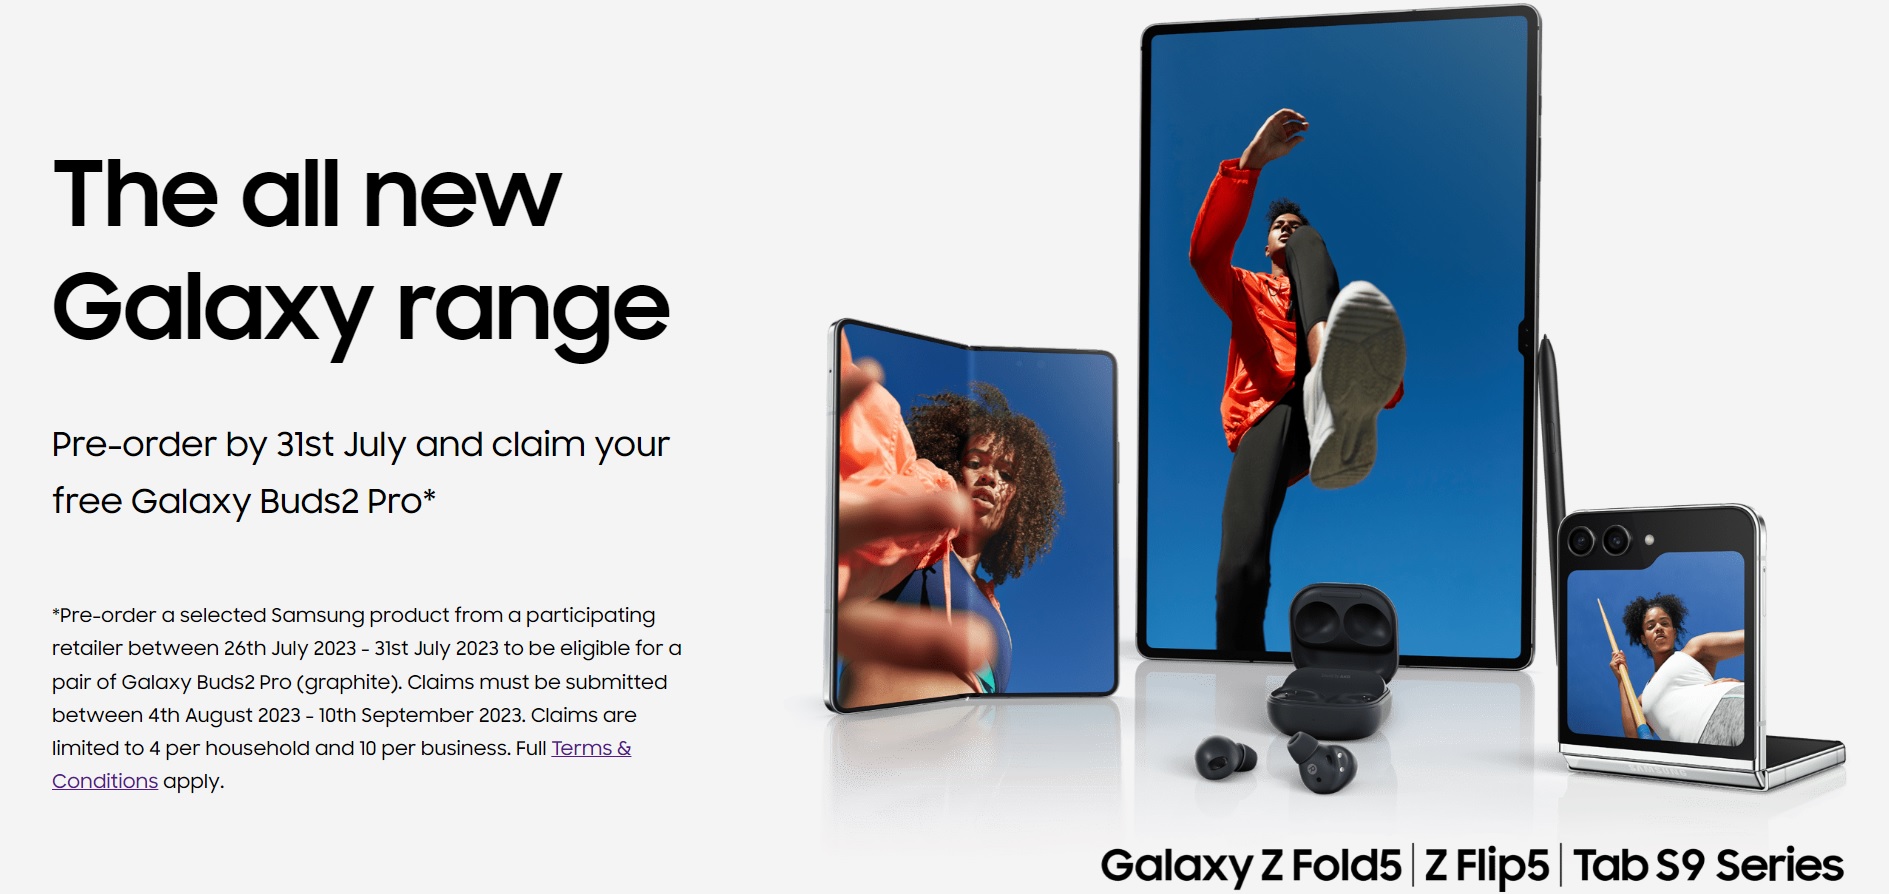 Free Galaxy Buds2 Pro with Samsung Z Flip5 and Fold5